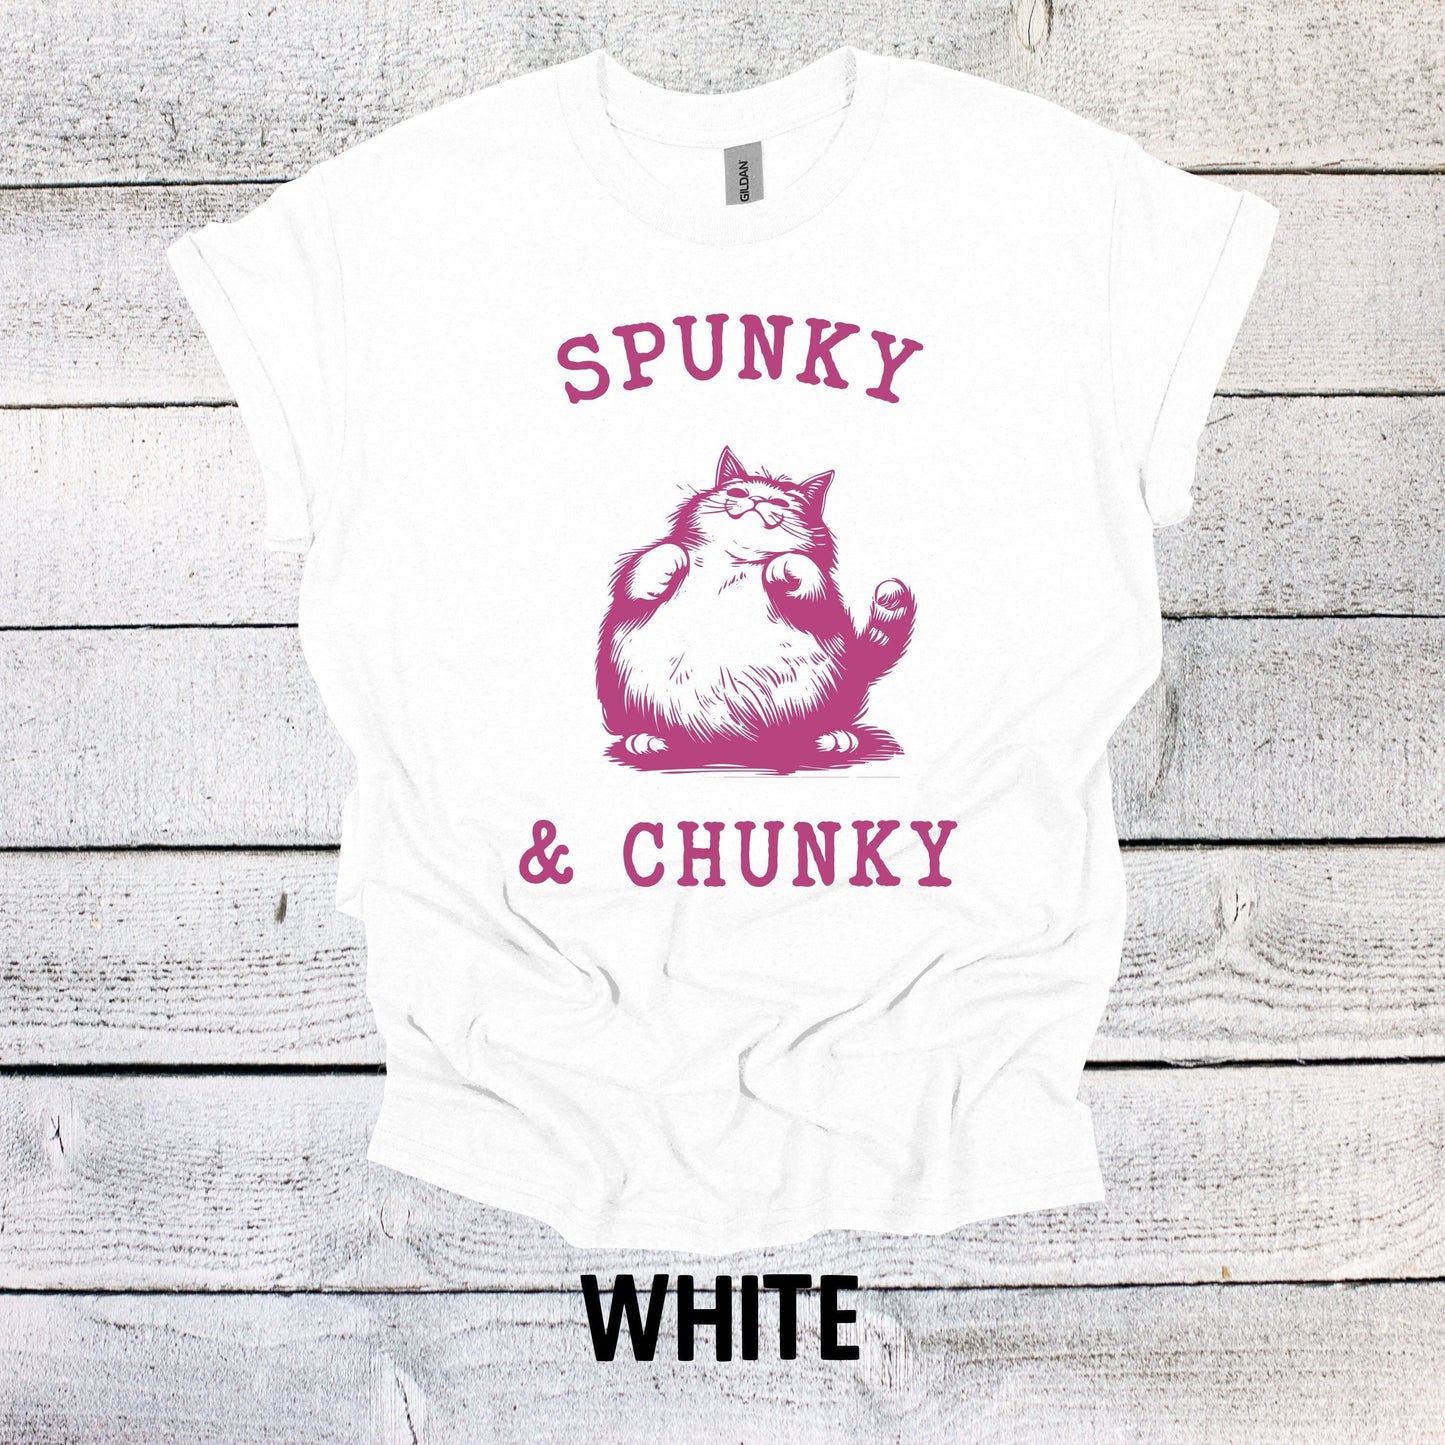 Spunky and Chunky Shirt, Cat Graphic Shirt, Vintage Funny Shirt Nostalgia Shirt Cotton Shirt Minimalist Shirt